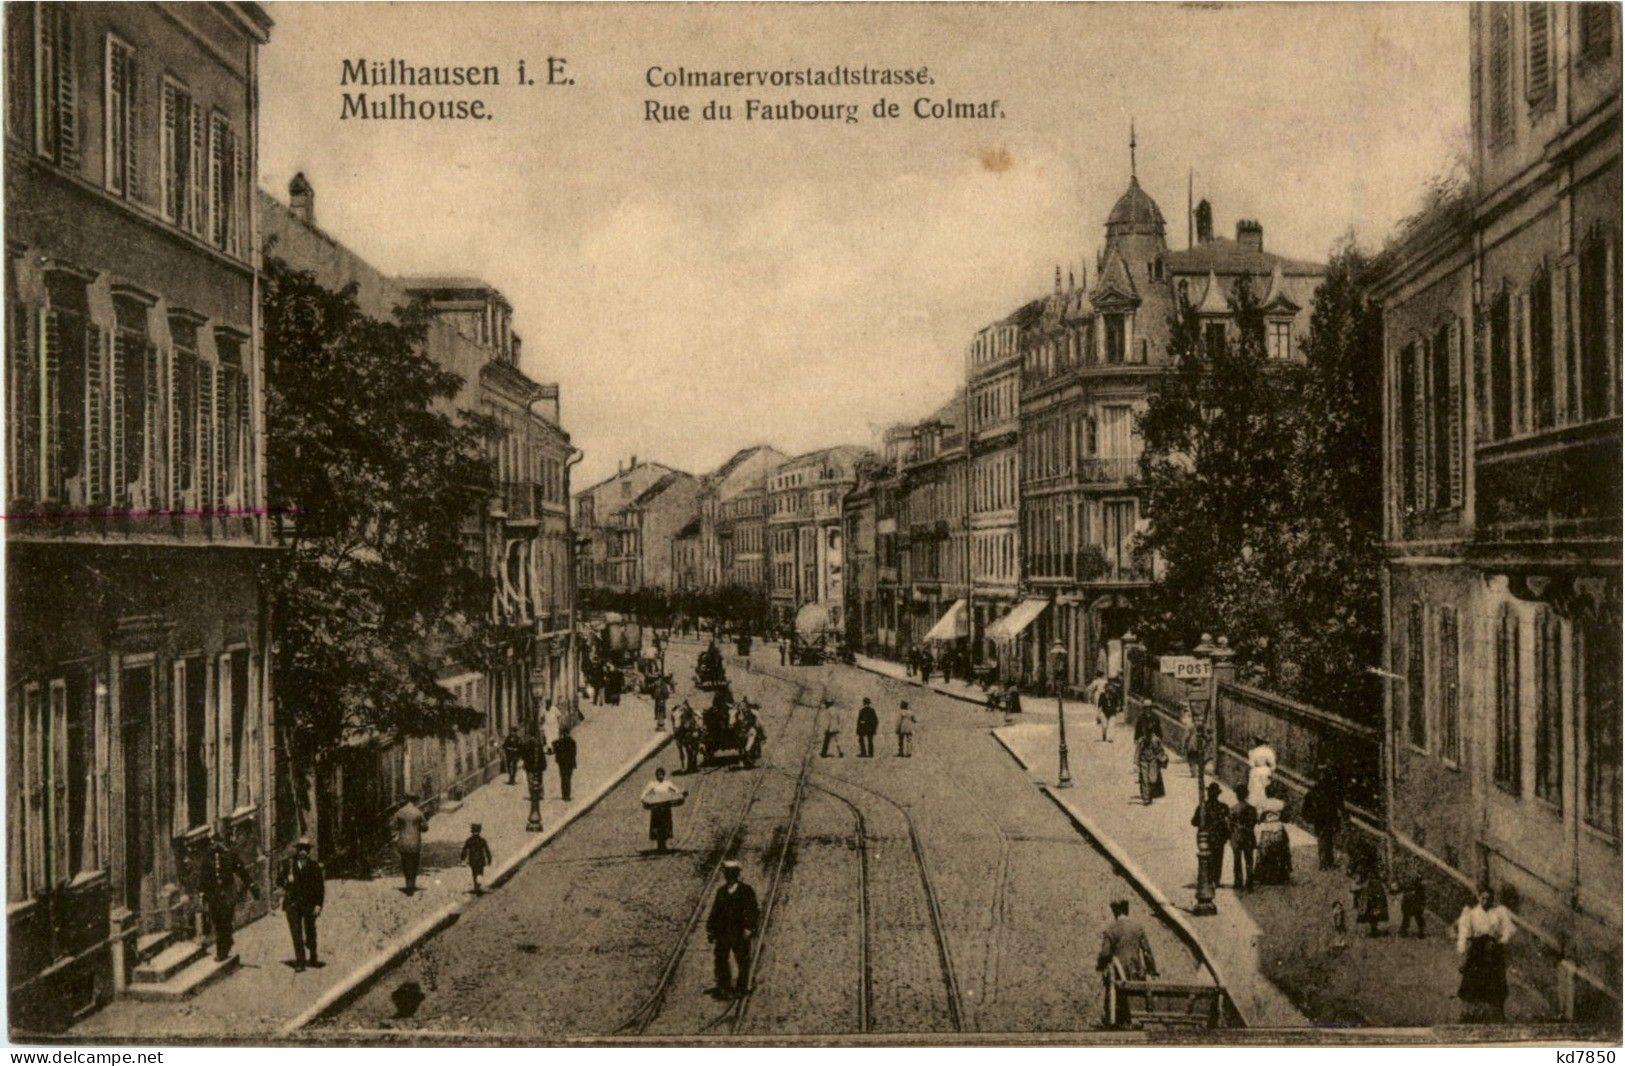 Mülhausen - Colmarervorstadtstrasse - Mulhouse